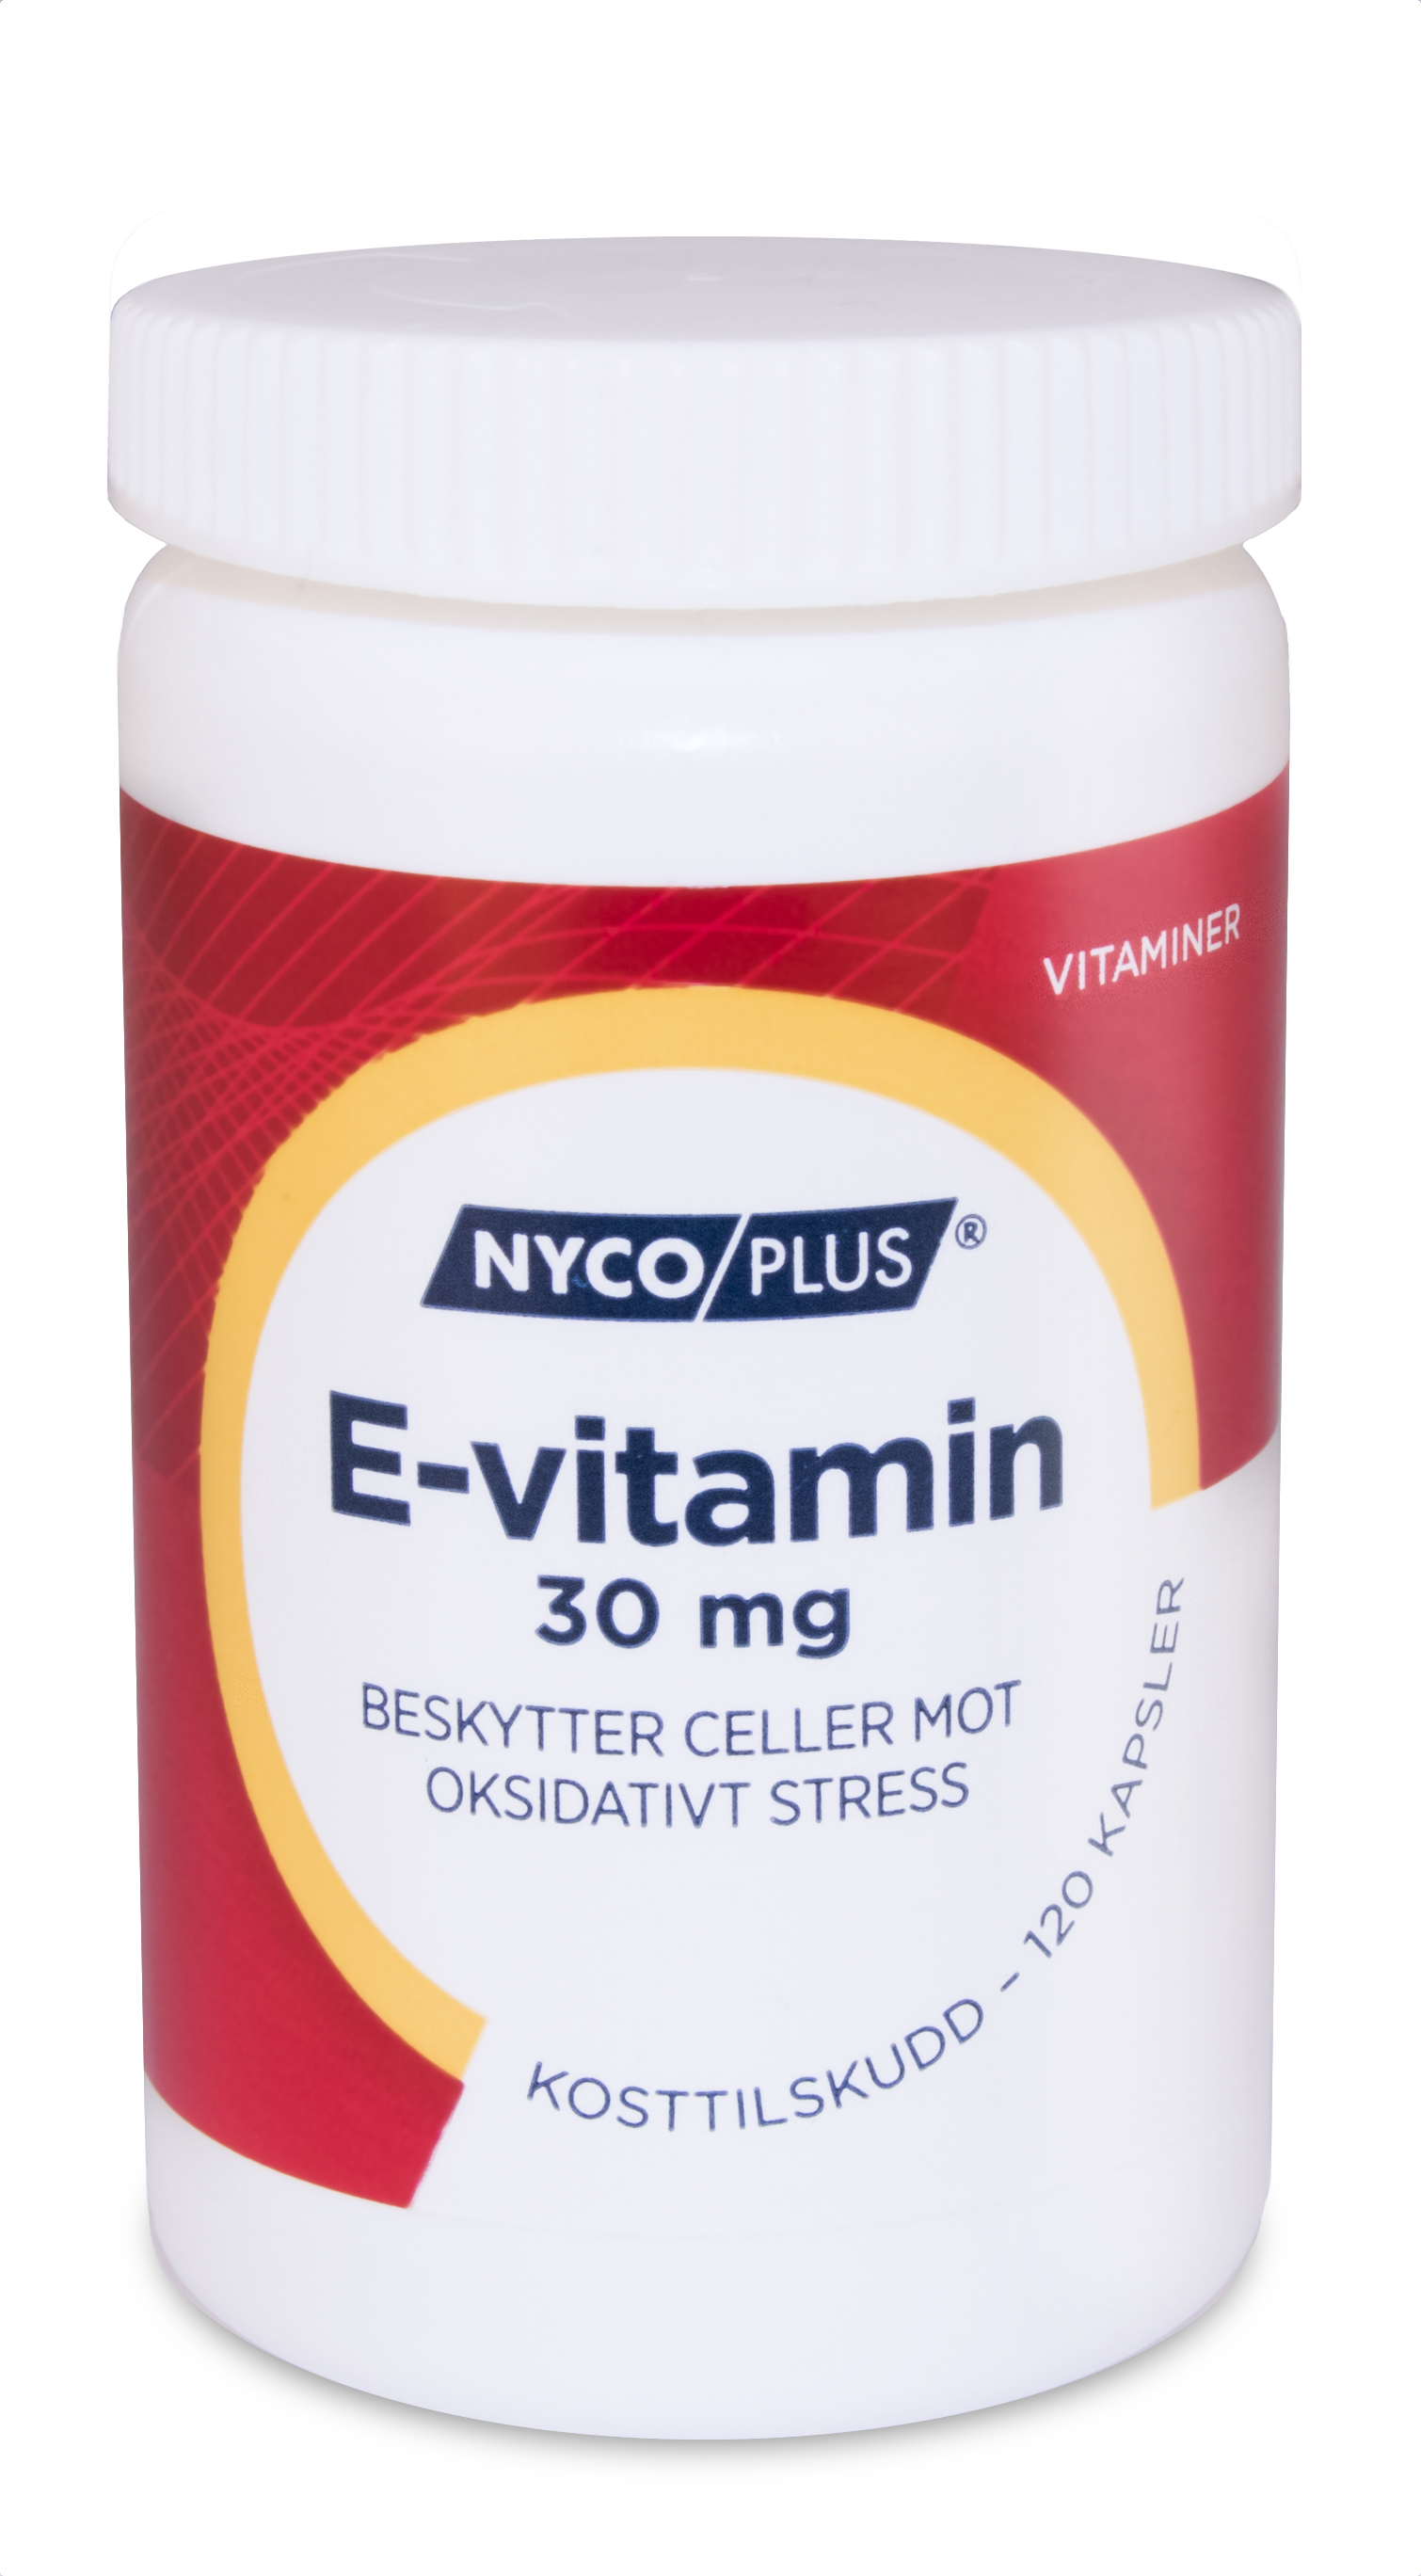 Nycoplus 30 mg E-vitamin kapsler, 120 stk.